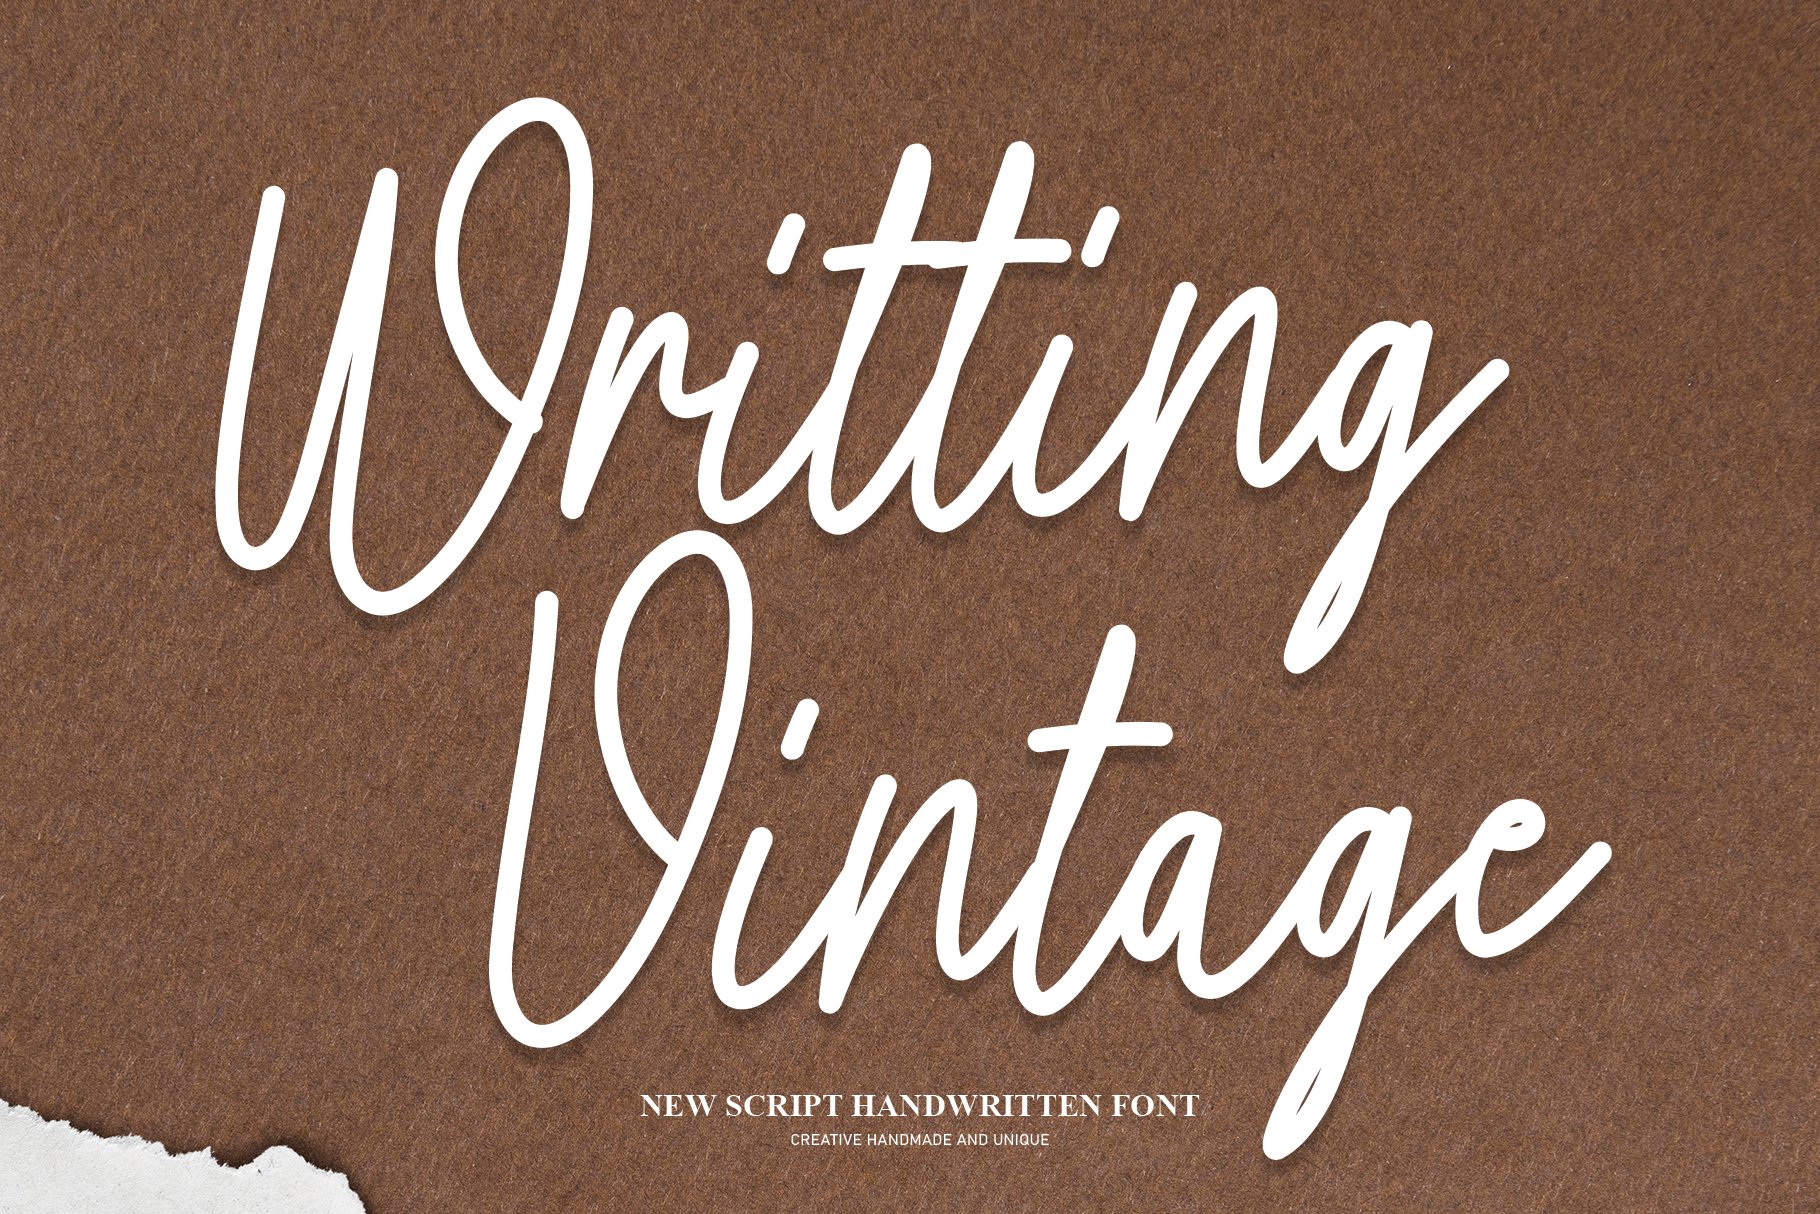 Writting Vintage | Script Font cover image.